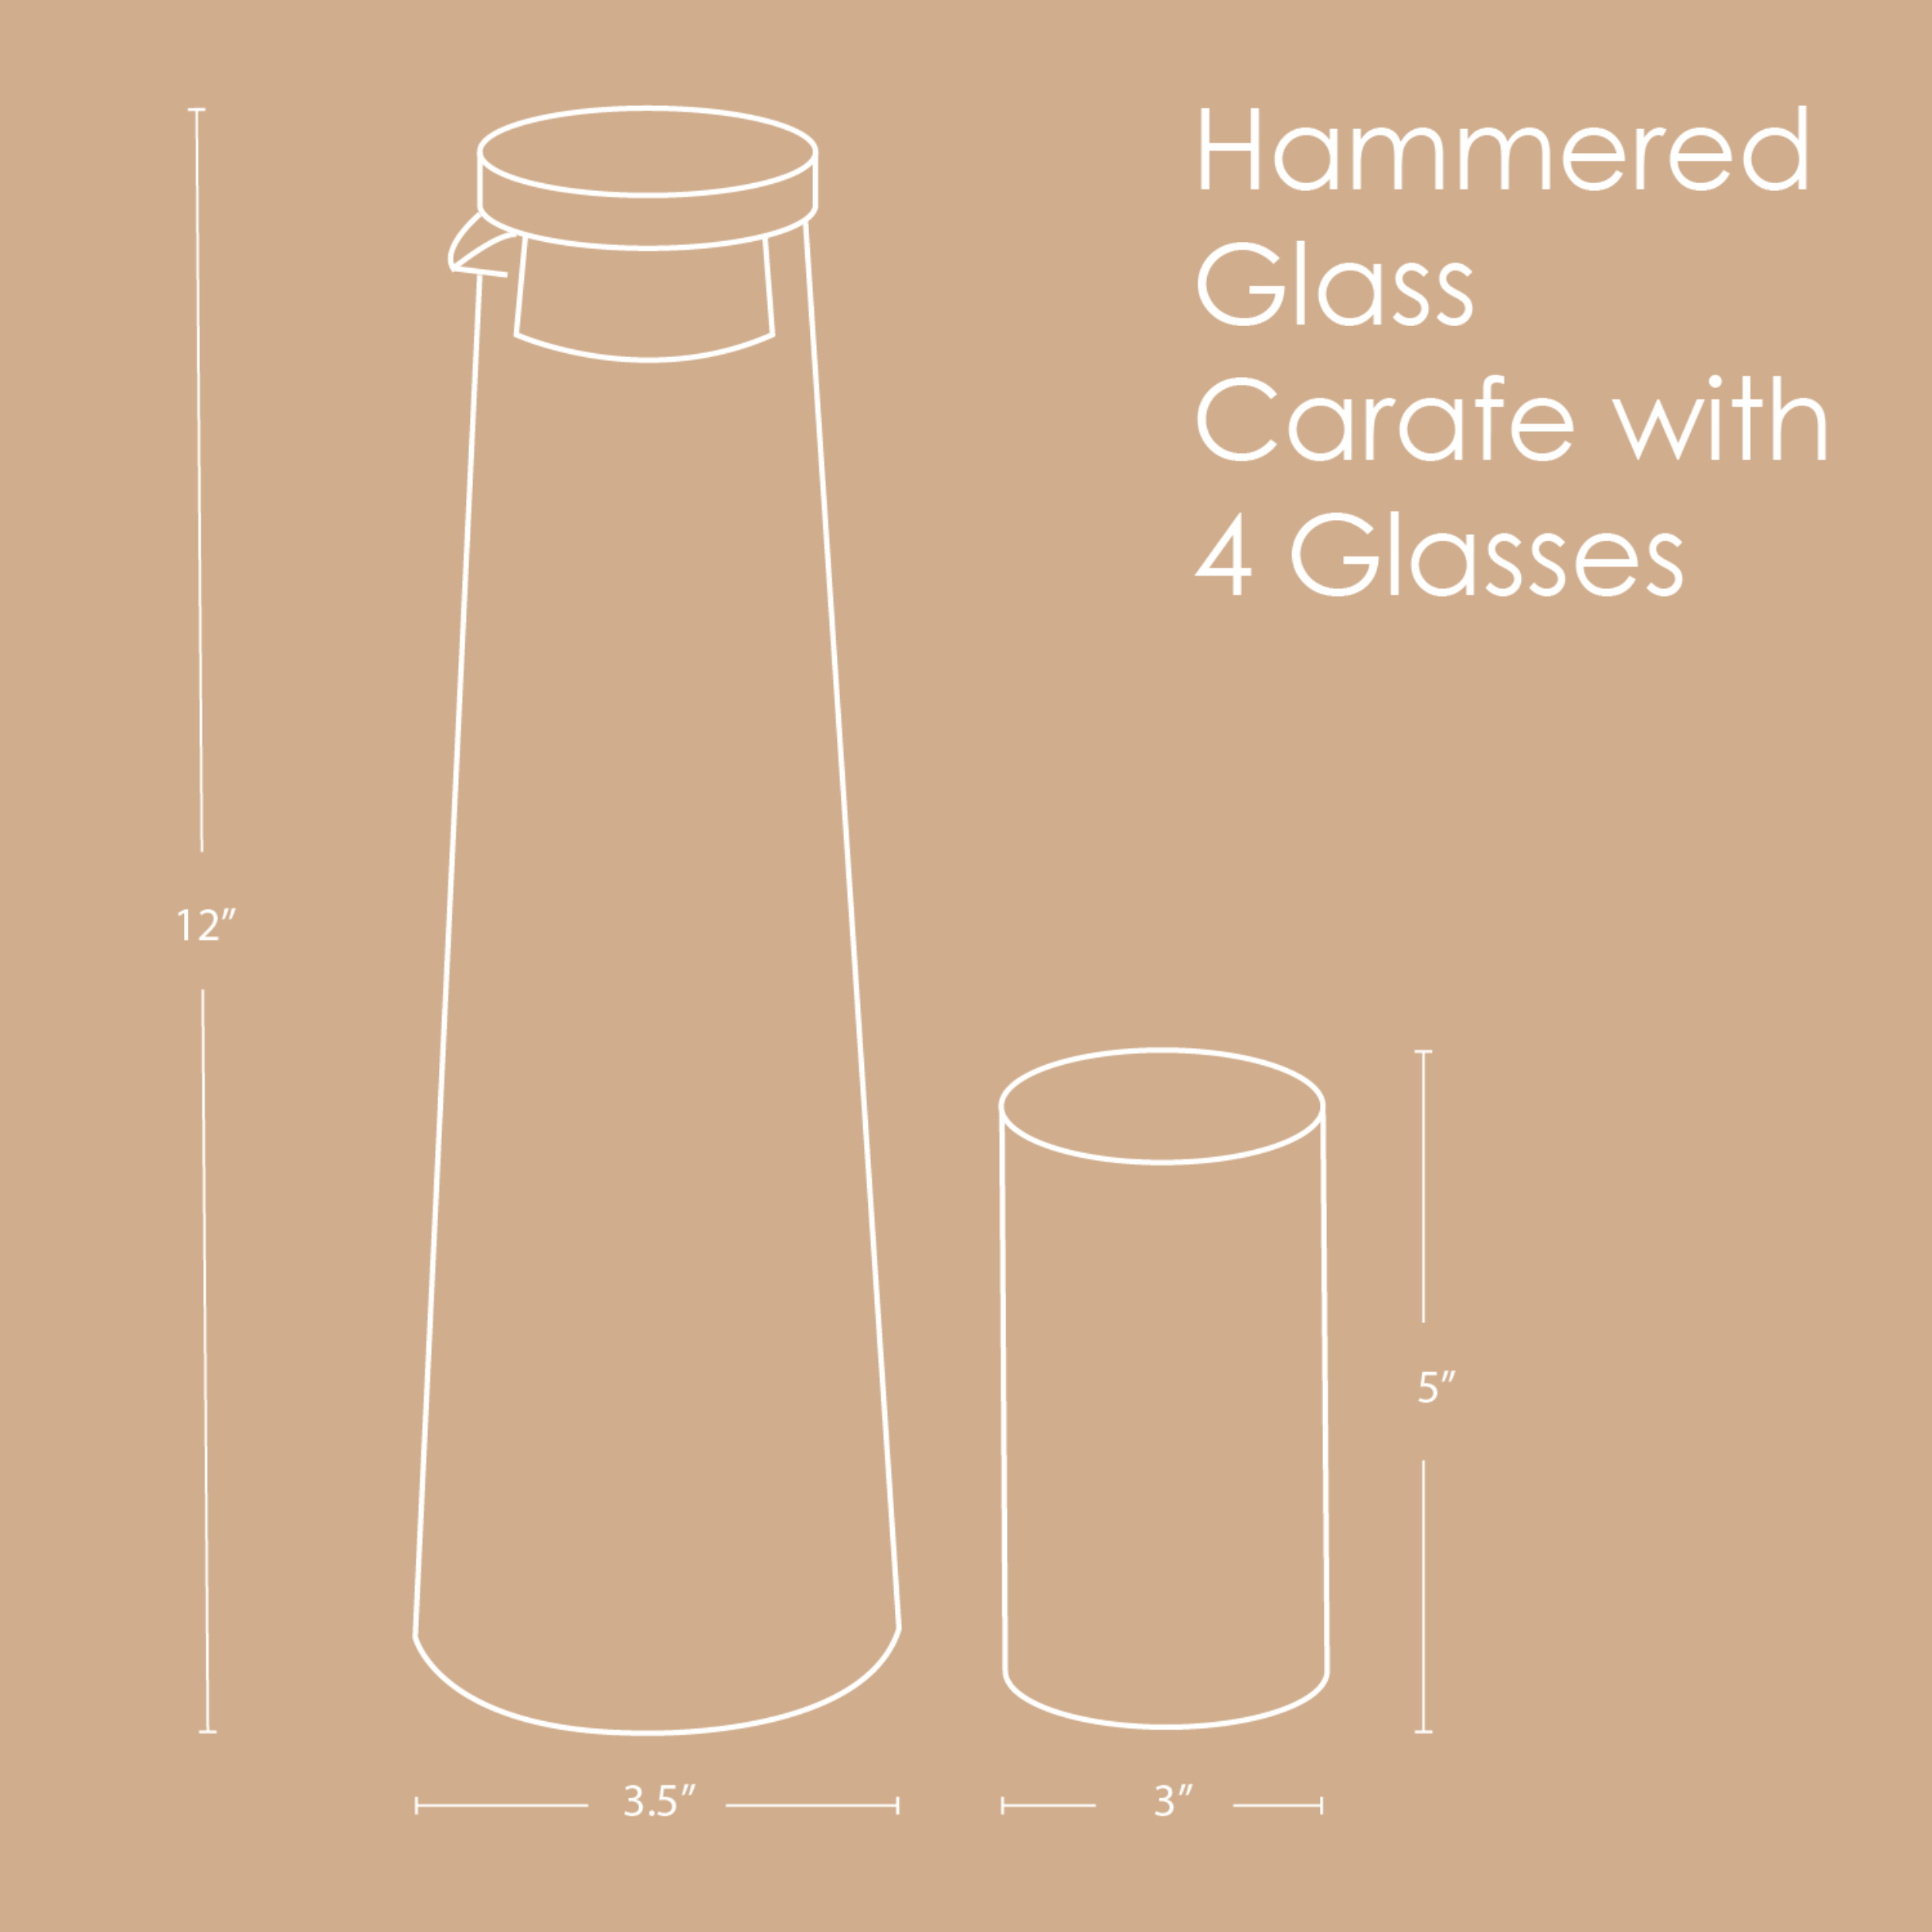 Hammered Glass Carafe